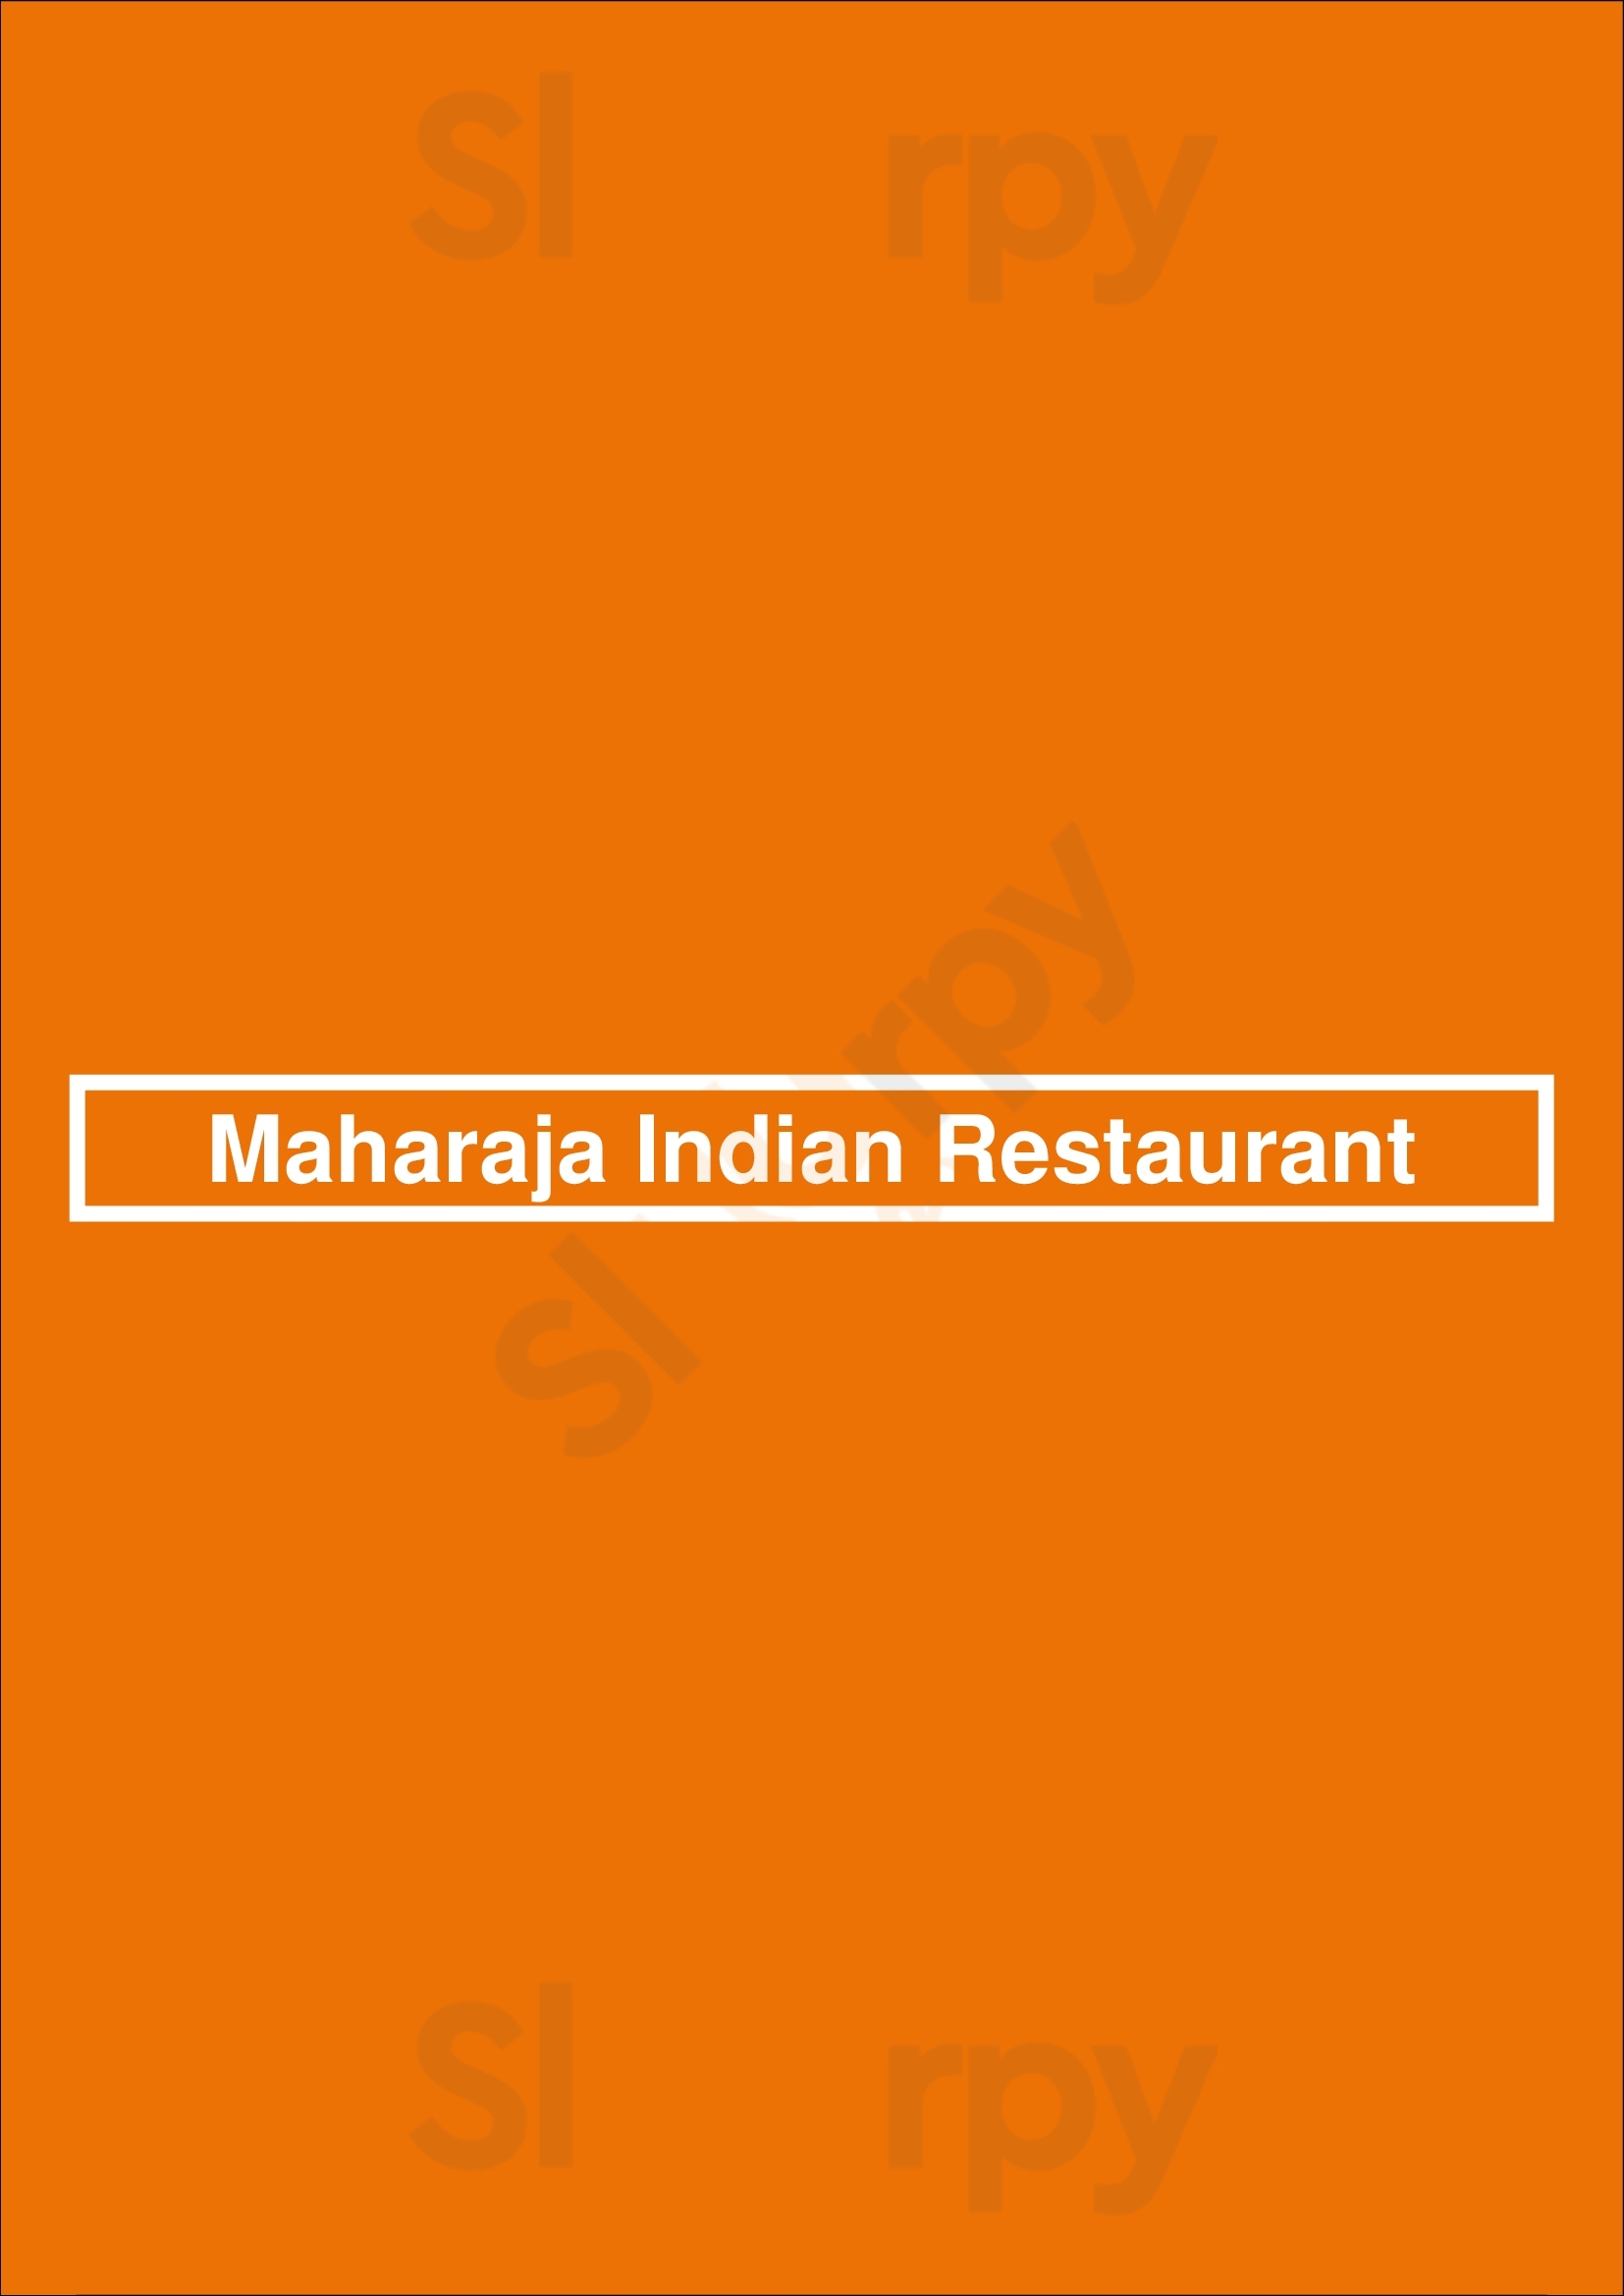 Maharaja Indian Restaurant Plano Menu - 1